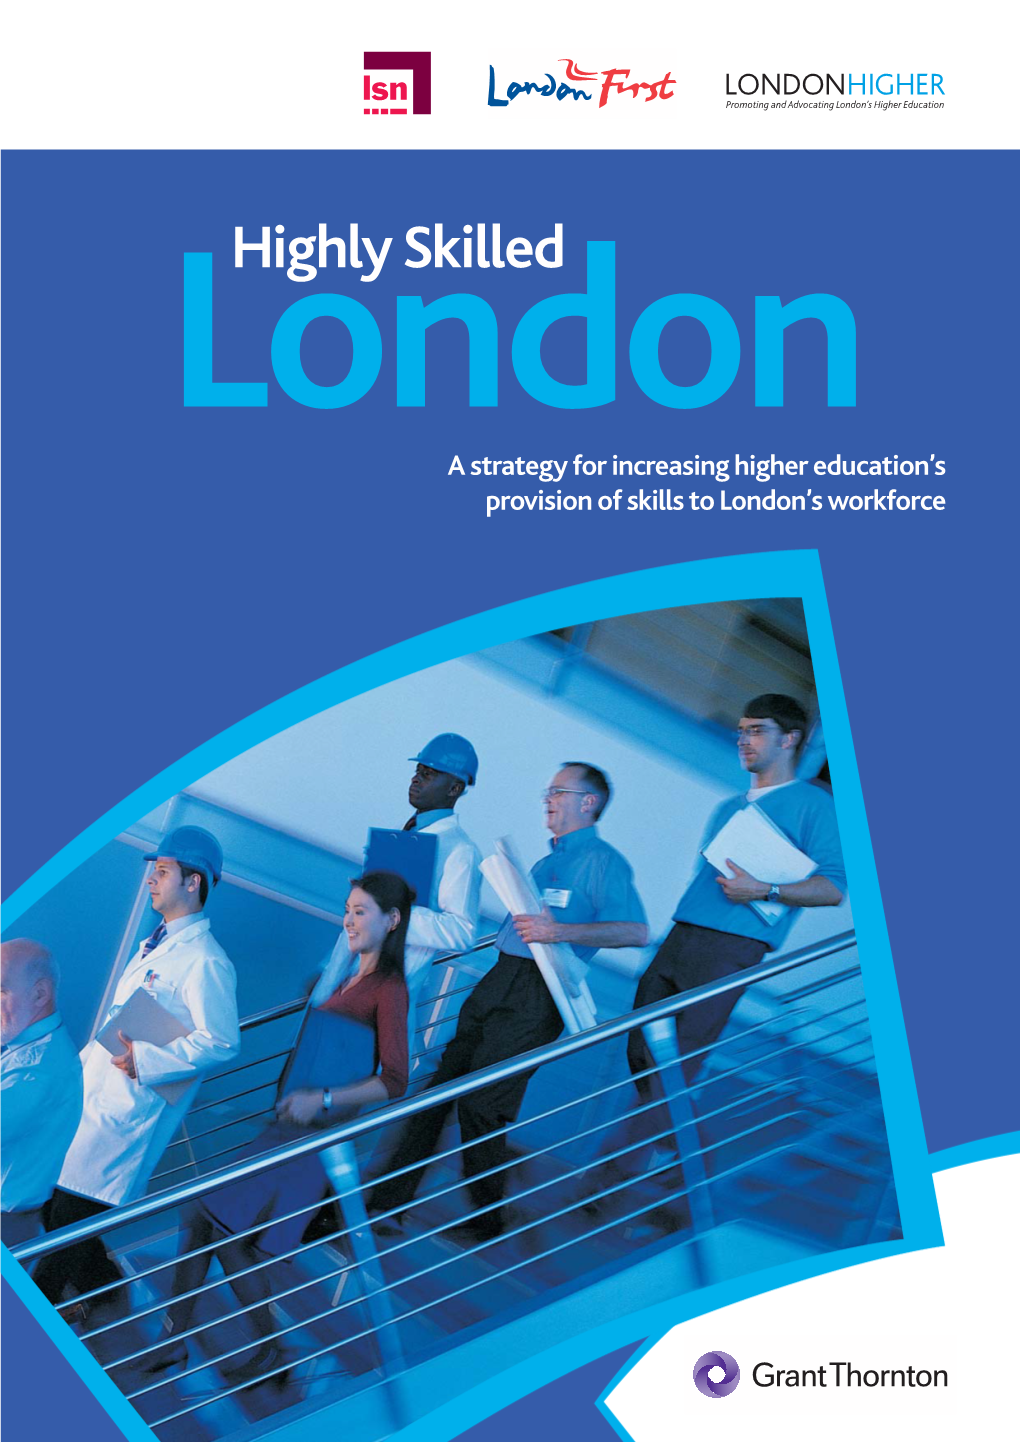 LONDON HIGHER Strategy Brochure